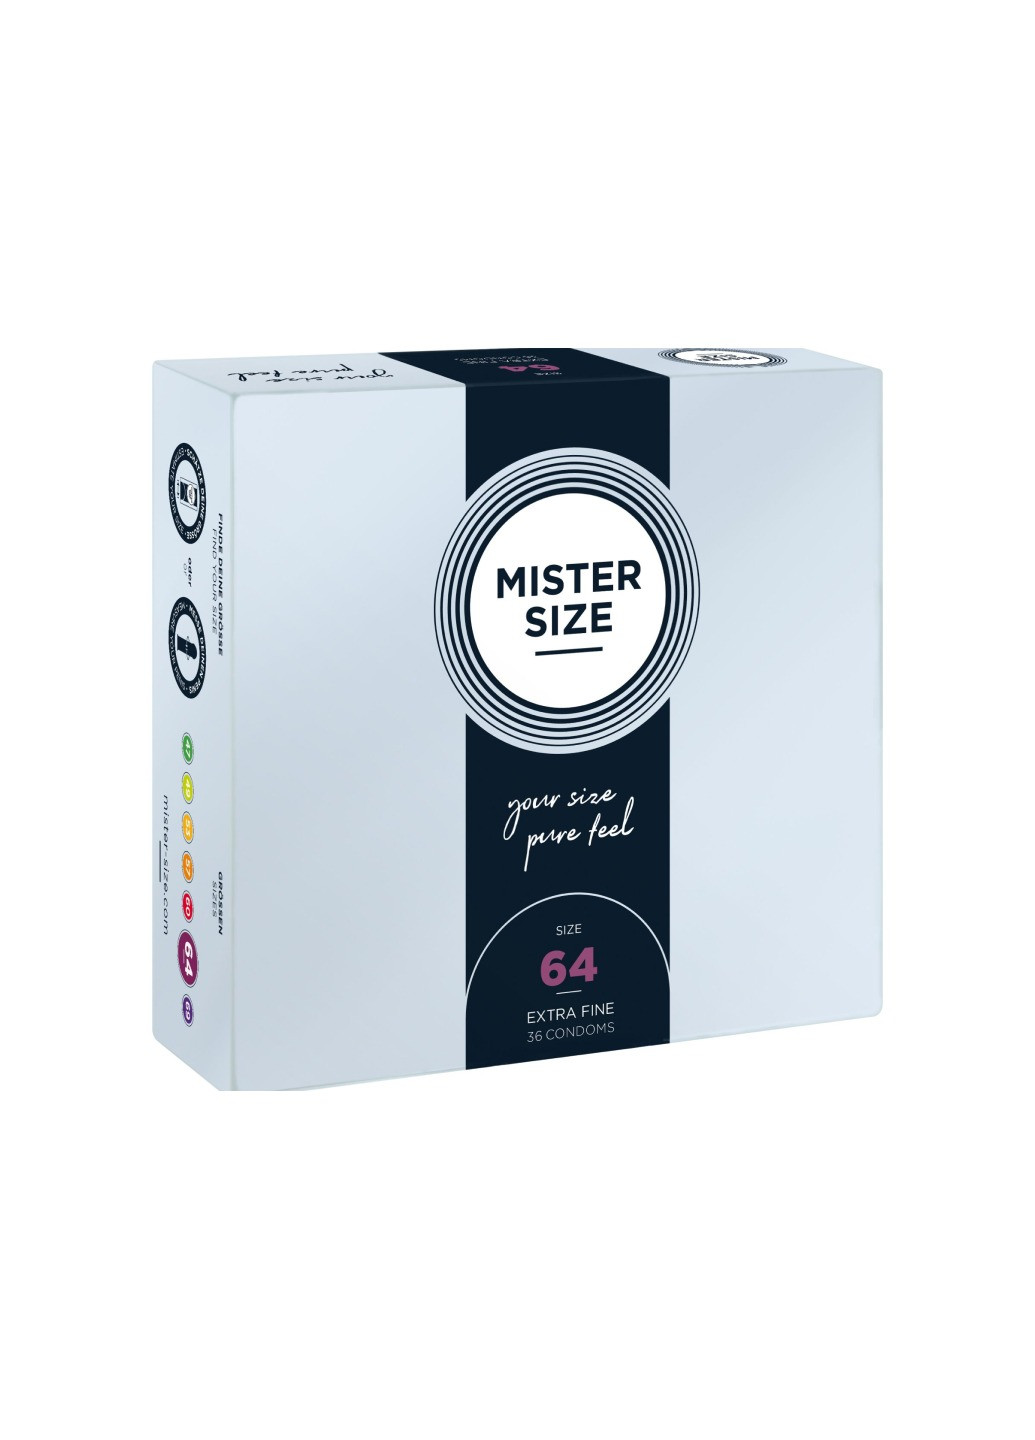 Презервативы Mister Size - pure feel - 64 (36 condoms), толщина 0,05 мм No Brand (276905770)